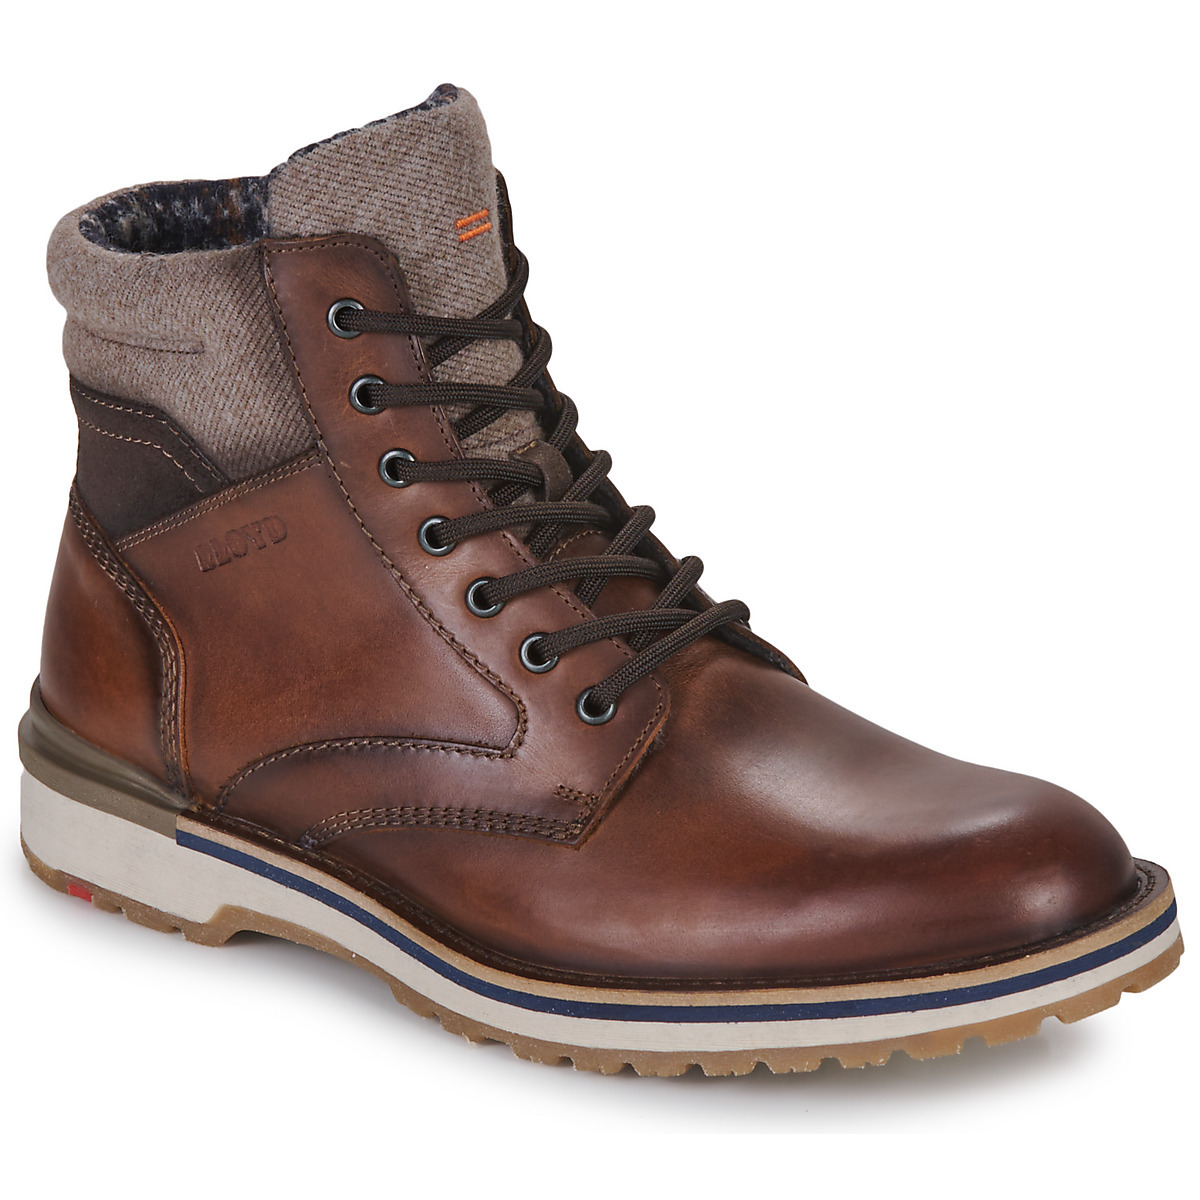 Lloyd - Men's Brown Boots at Spartoo GOOFASH